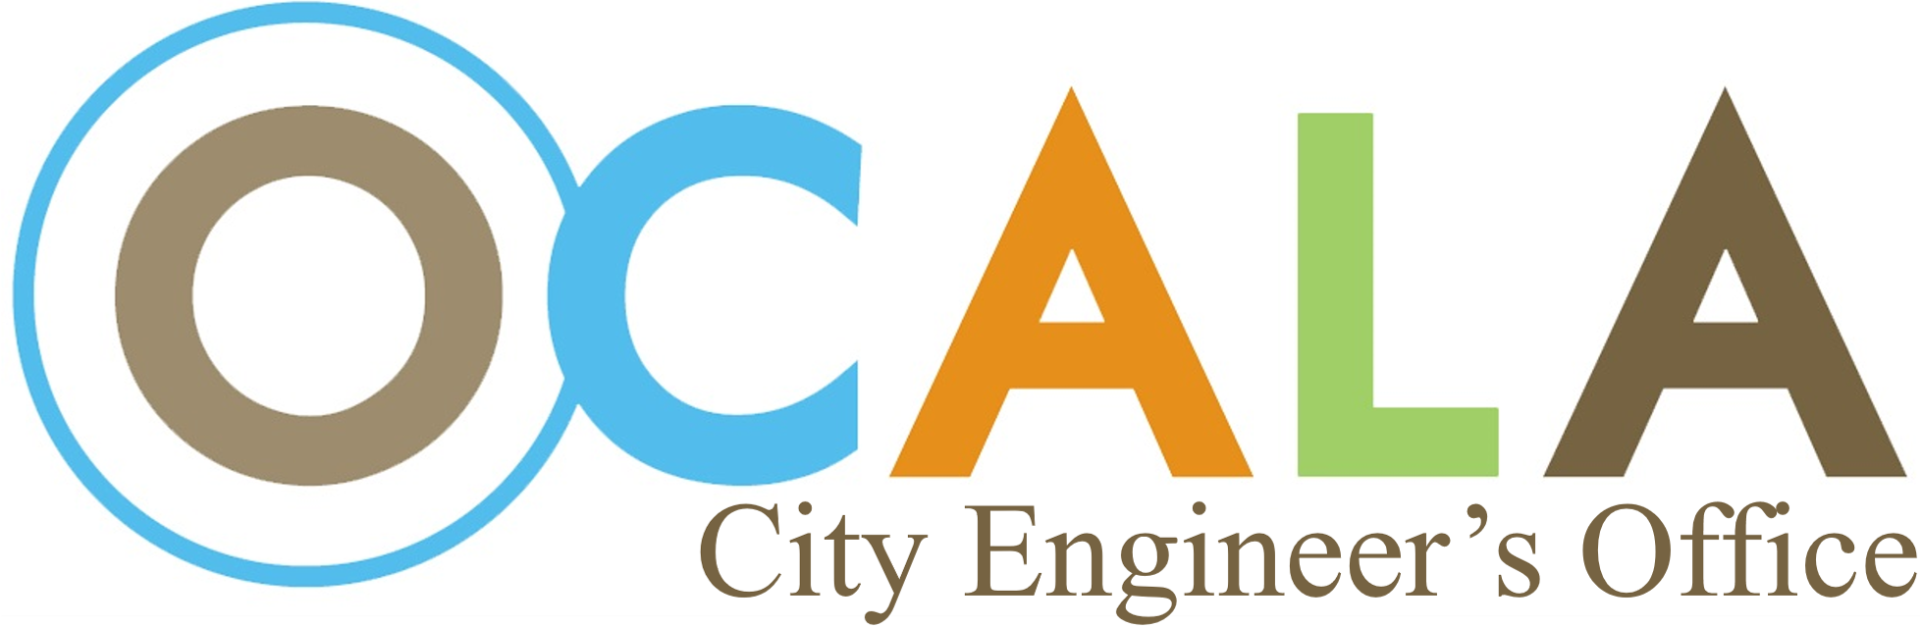 City Engineers Office logo